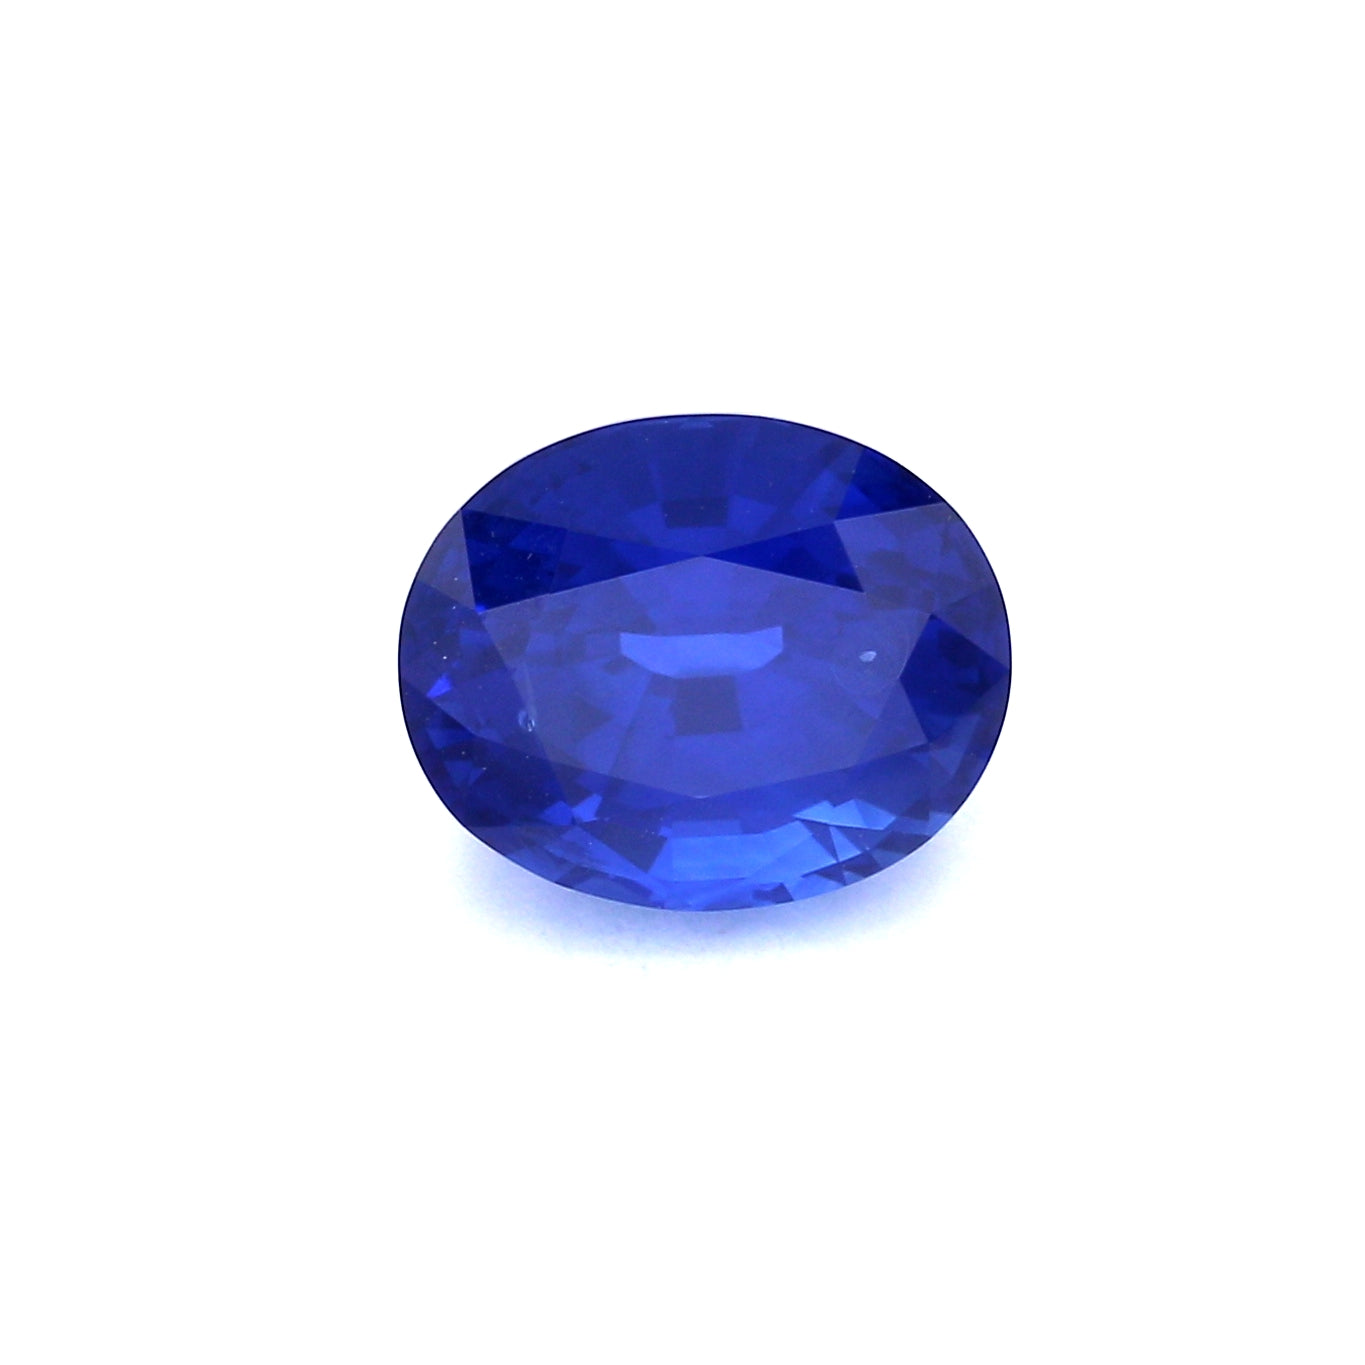 5.15ct Vivid, Royal Blue, Oval Sapphire, Heated, Sri Lanka - 10.64 x 8.71 x 6.72mm